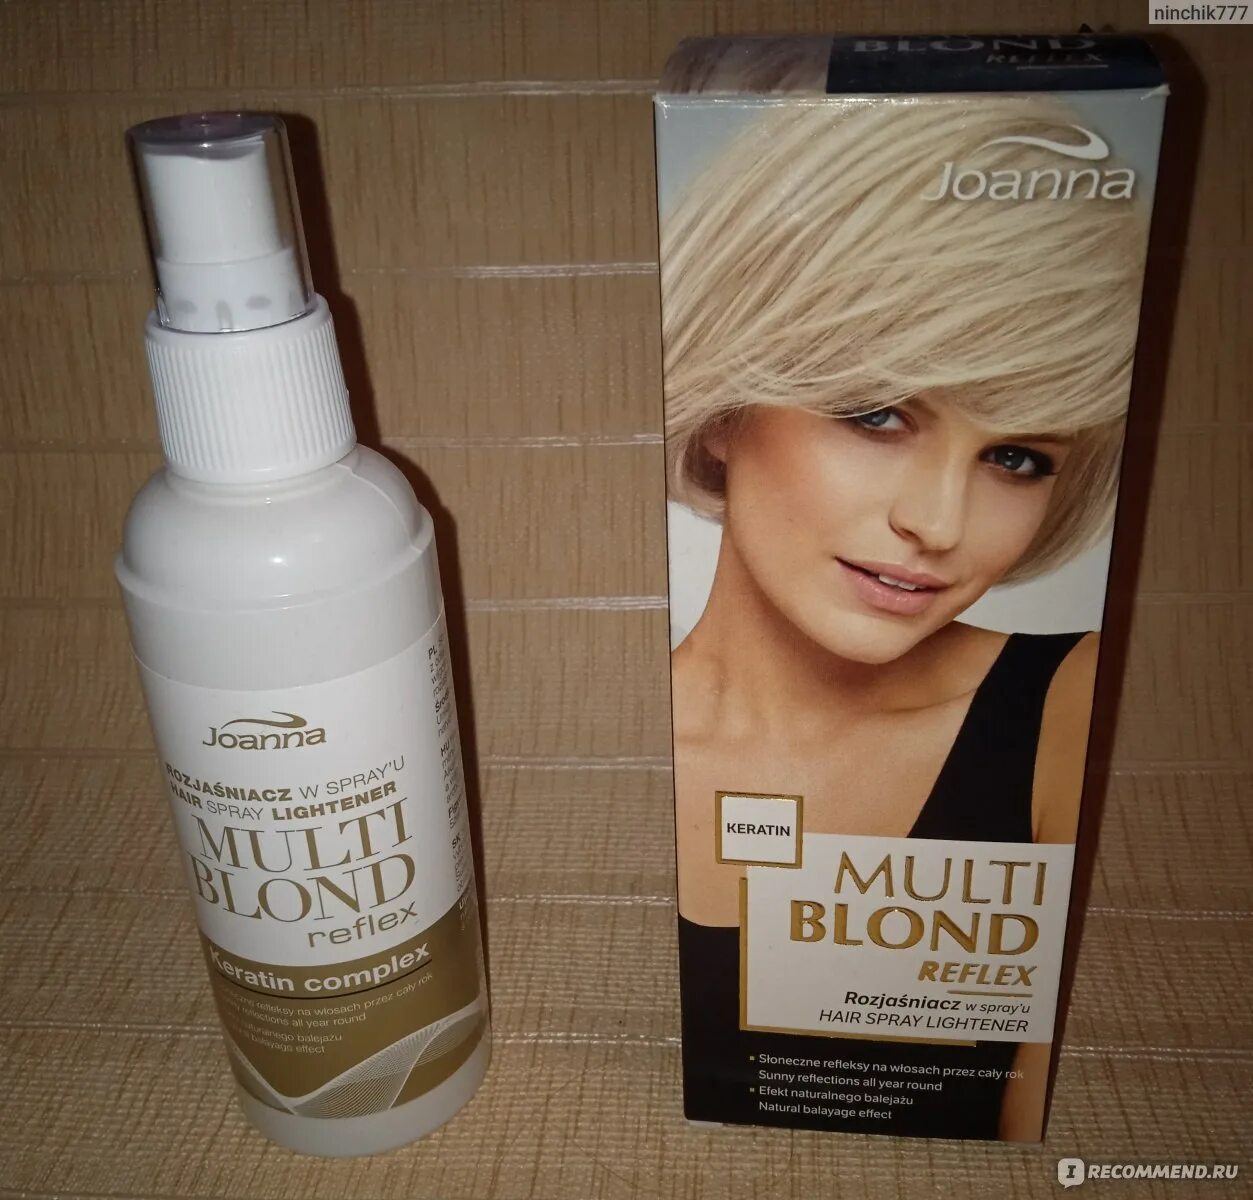 Joanna Multi blond Spray. Joanna осветлитель для волос. Joanna для волос спрей. Blonde спрей для волос.